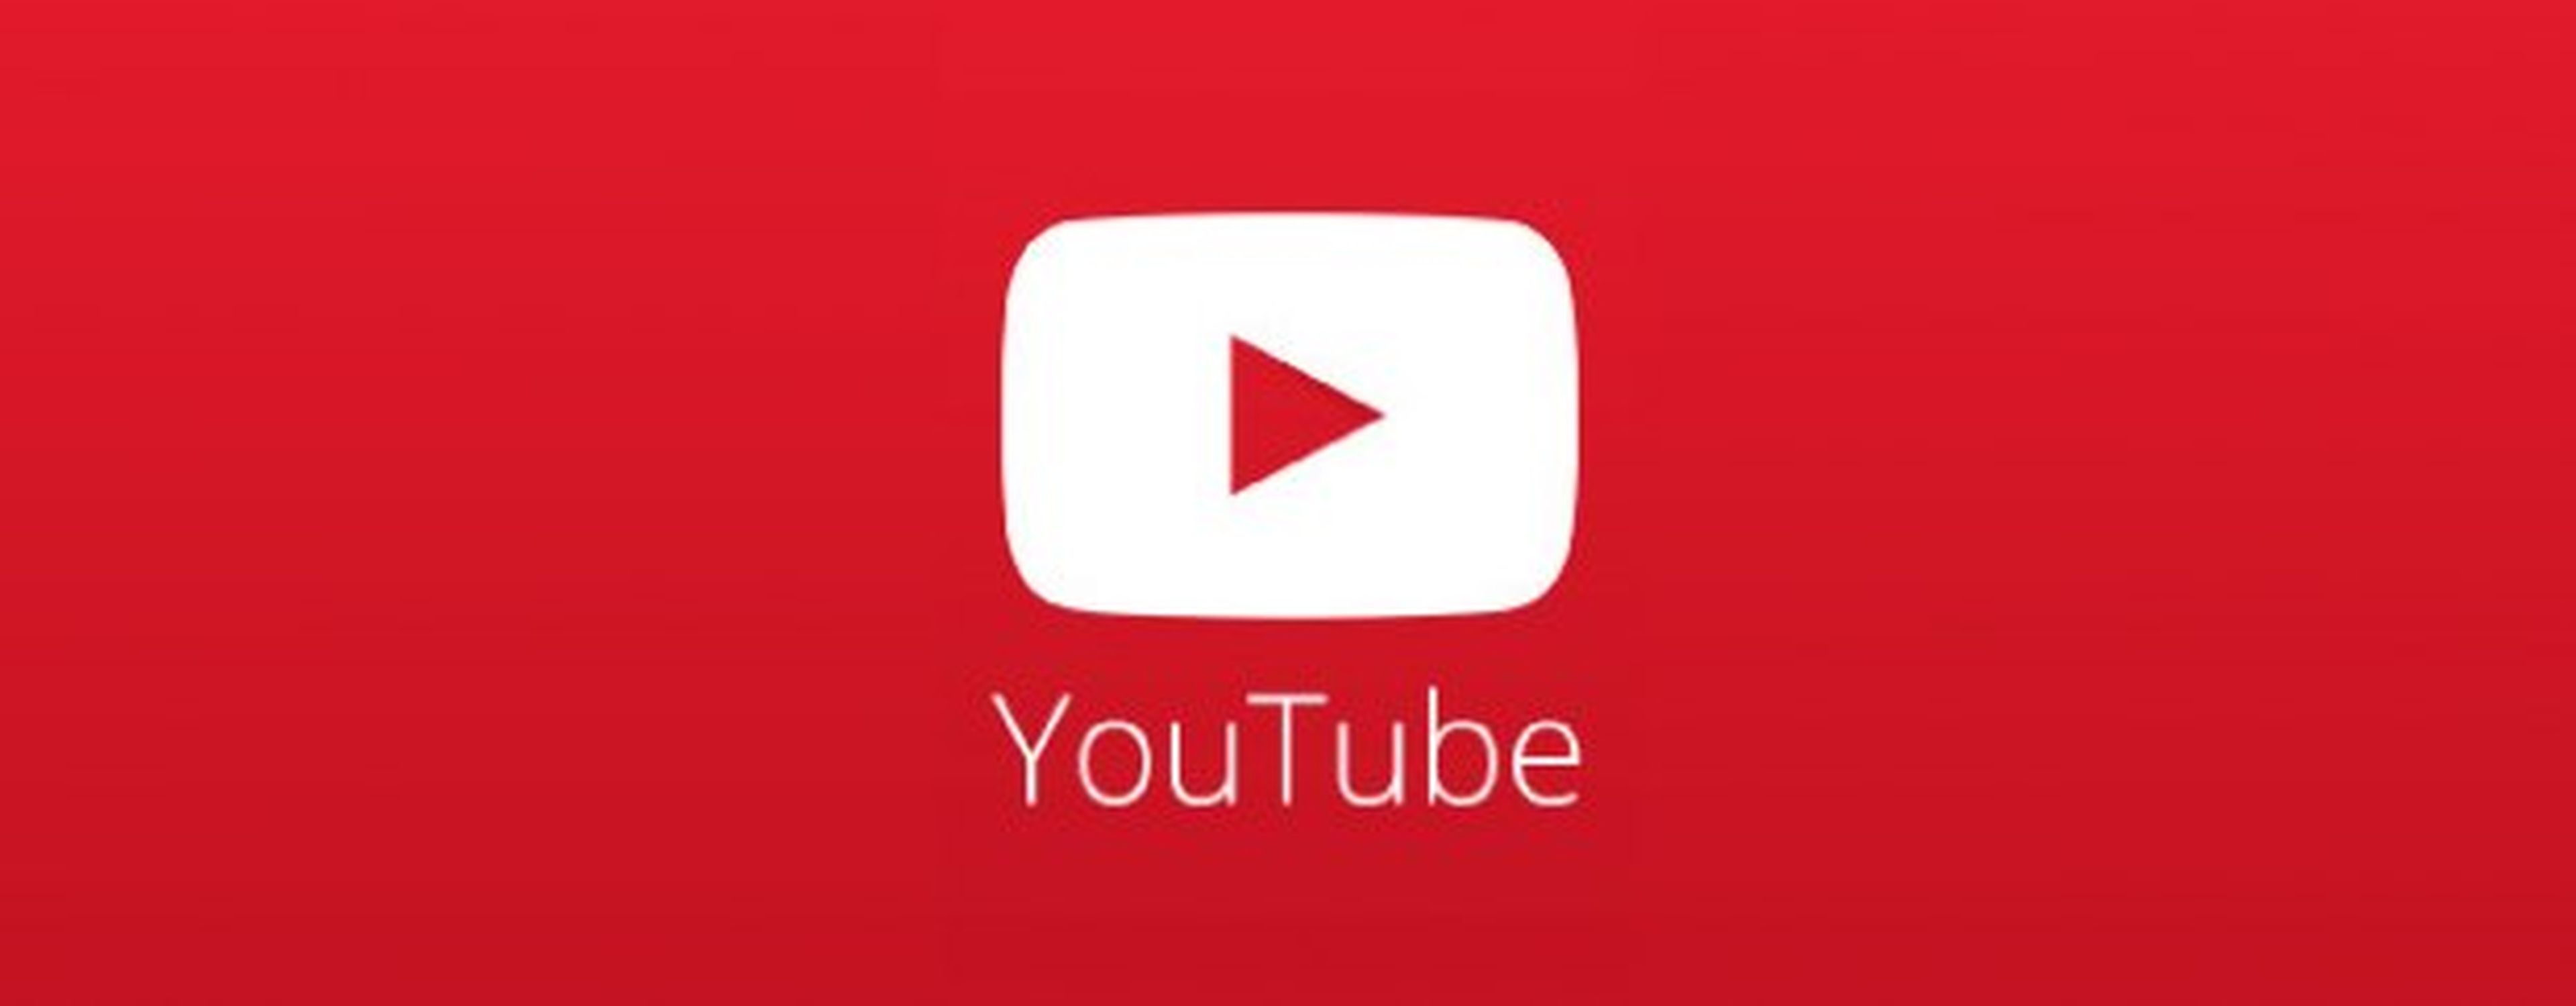 nuevo logo youtube